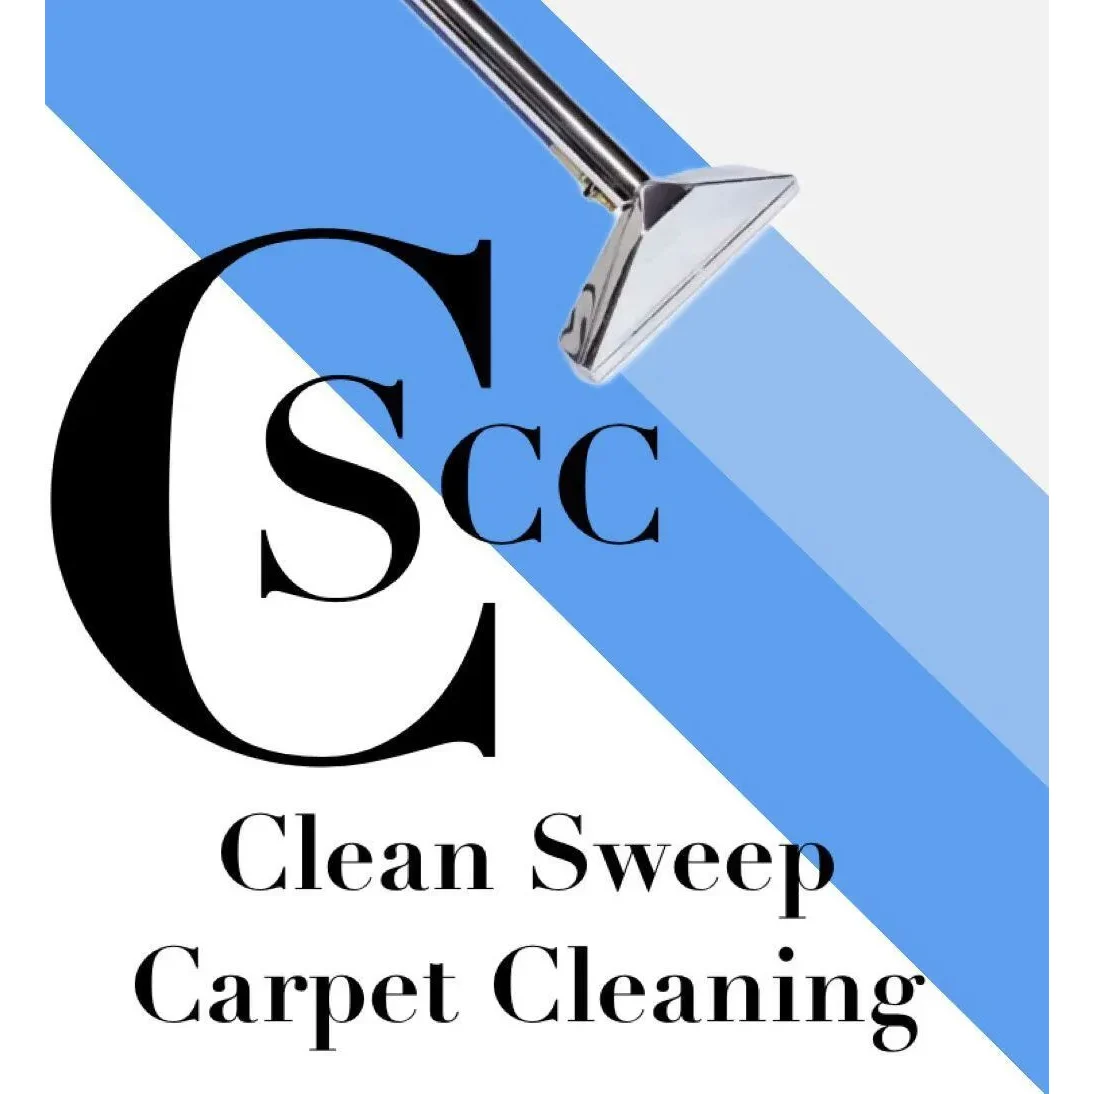 Clean Sweep Carpet Cleaning - Bristol, Bristol - 07400 414451 | ShowMeLocal.com